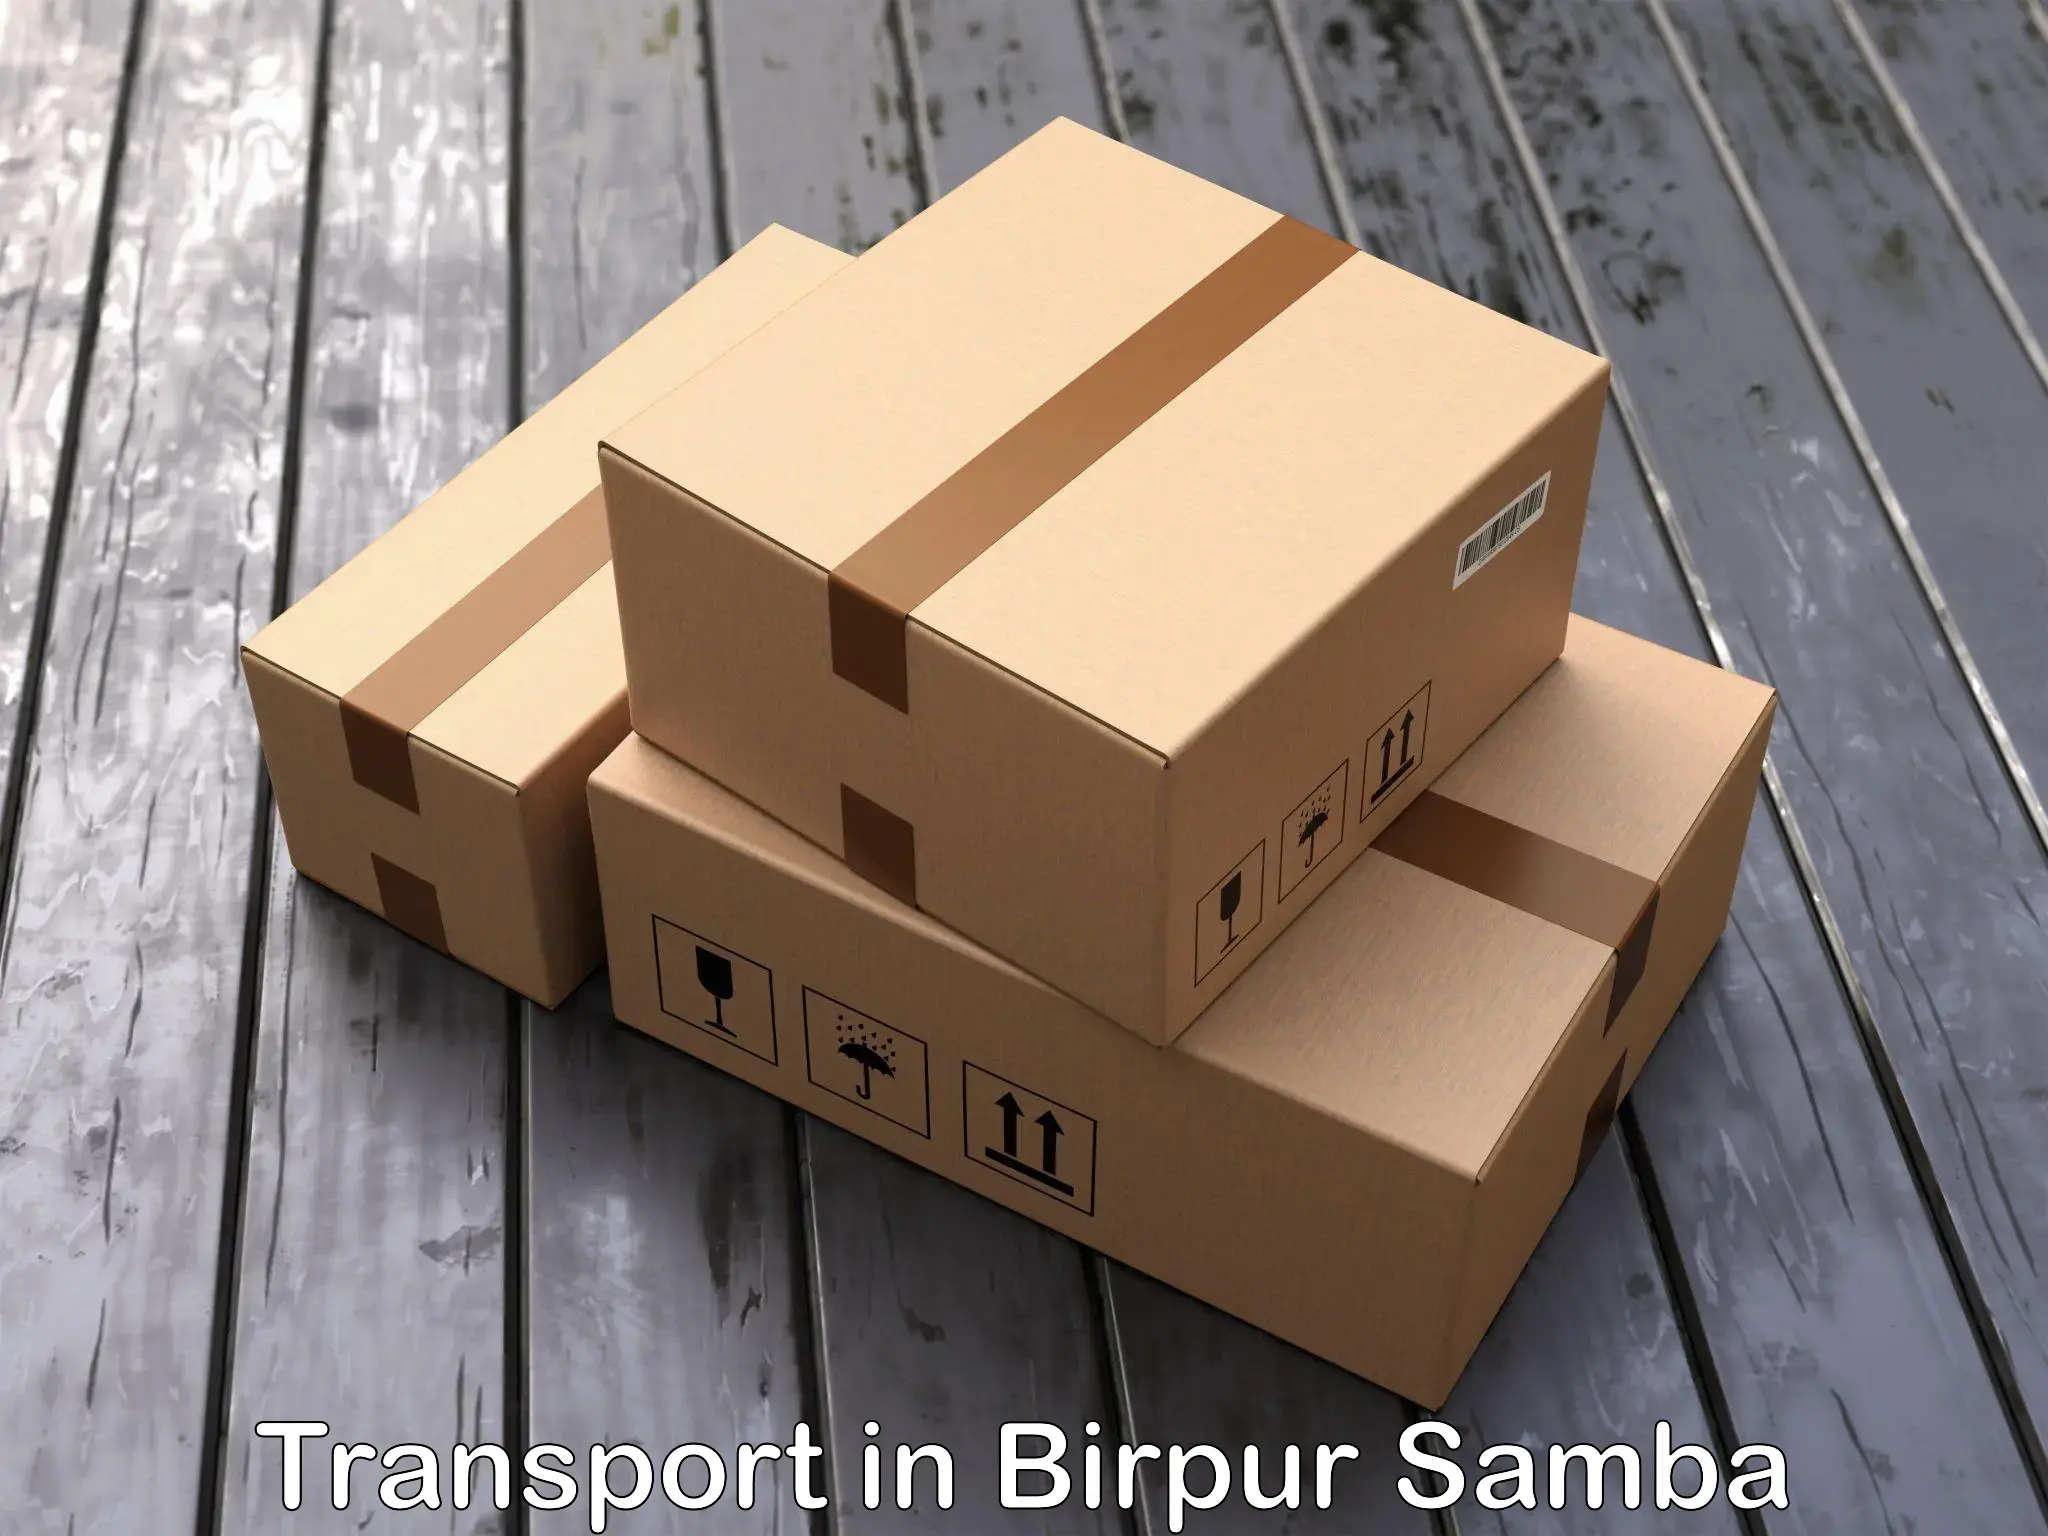 Commercial transport service in Birpur Samba